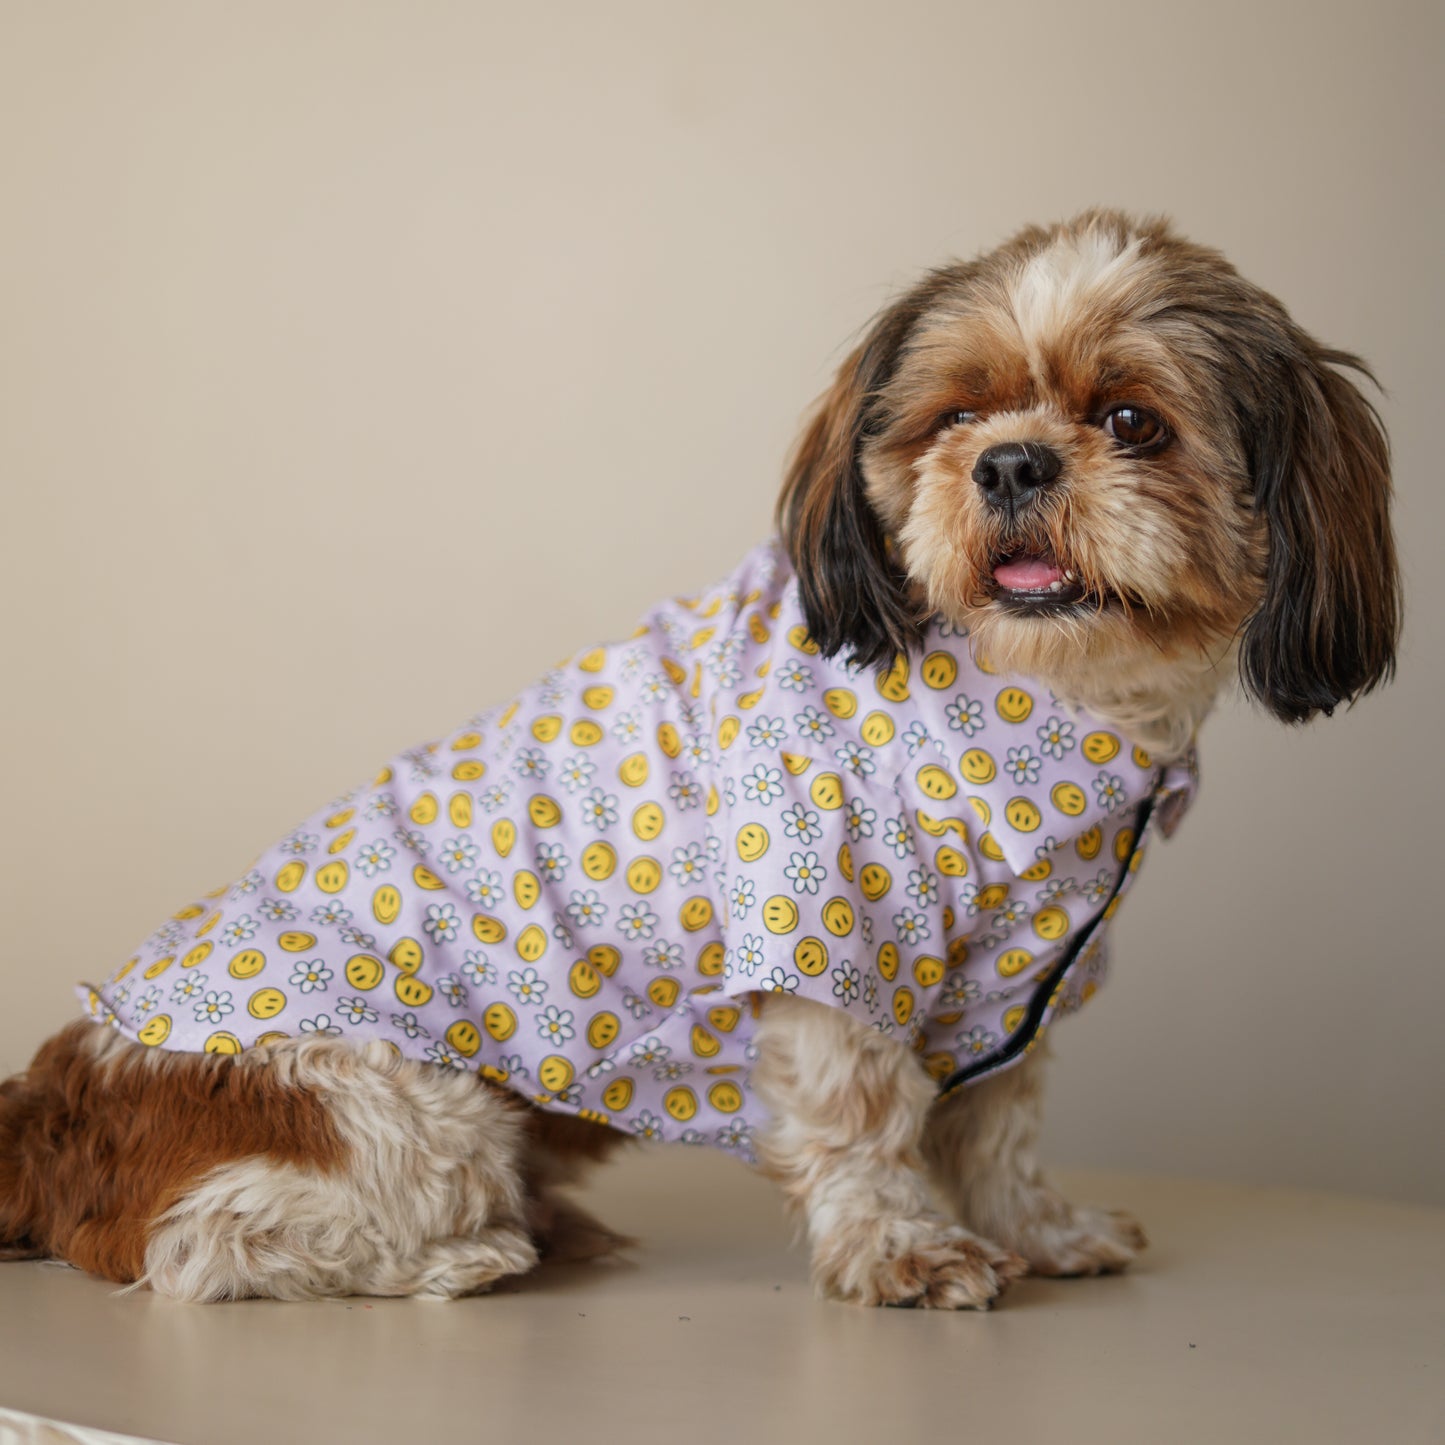 Unisex Quirky Shirt for Human + Dog Shirt Twinning set